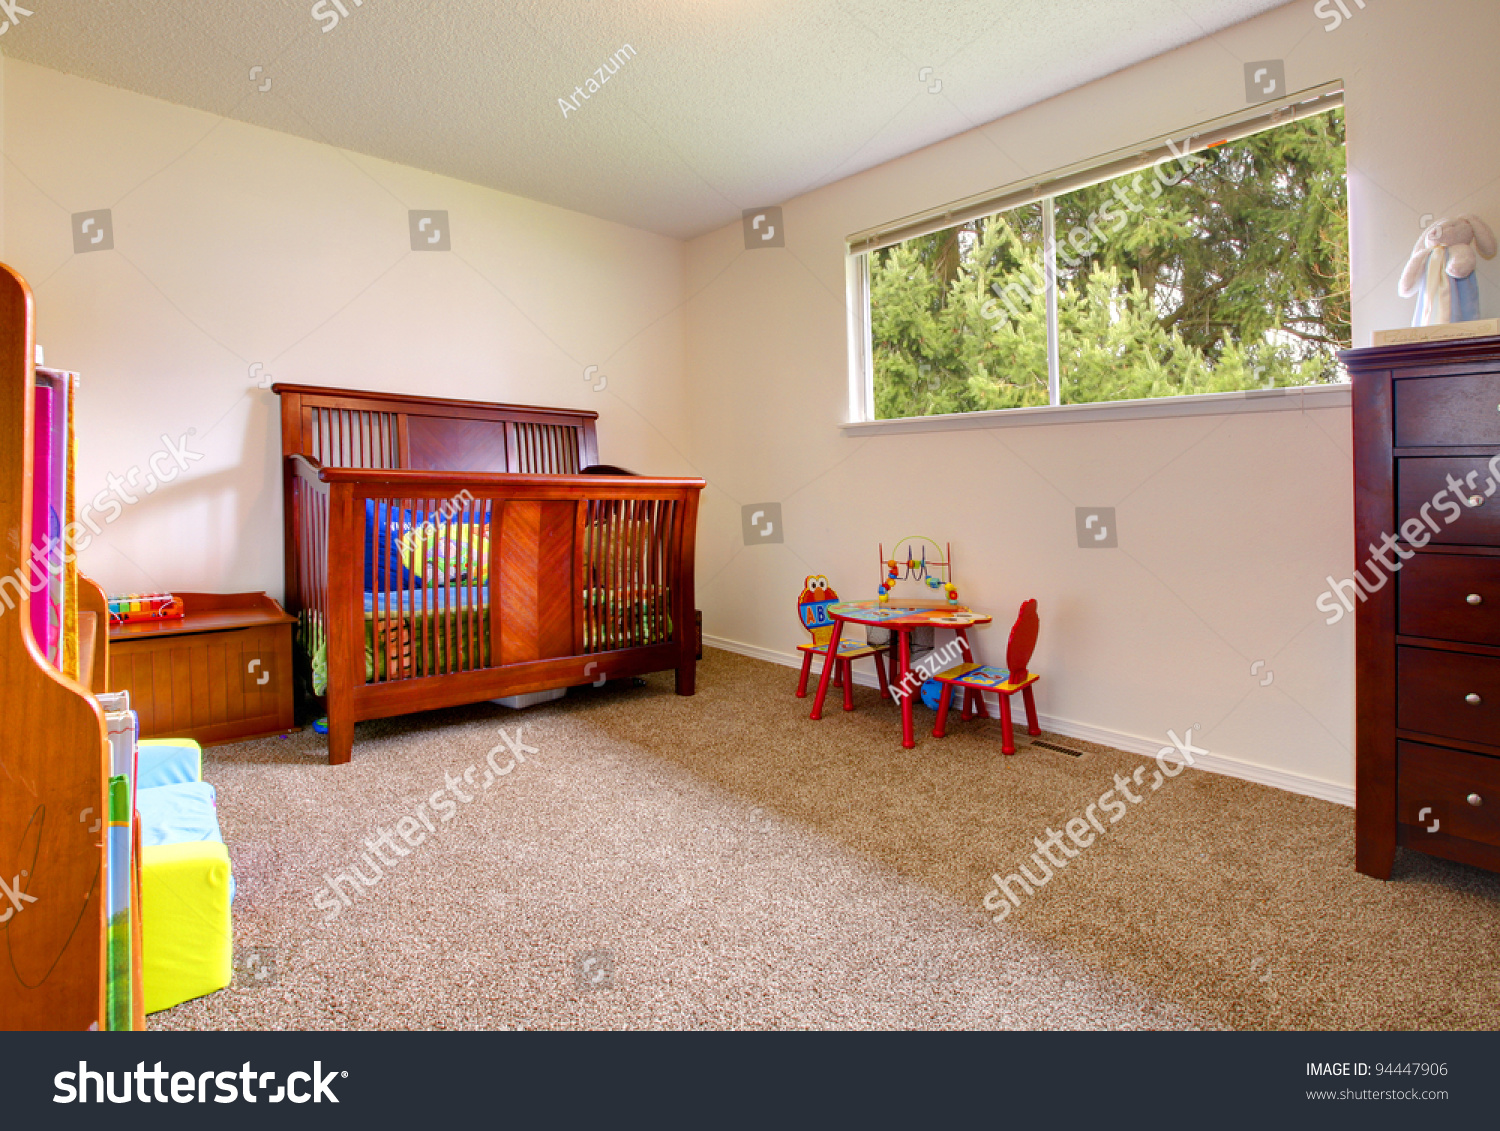 Simple Baby Room Cherry Wood Crib Stock Photo Edit Now 94447906